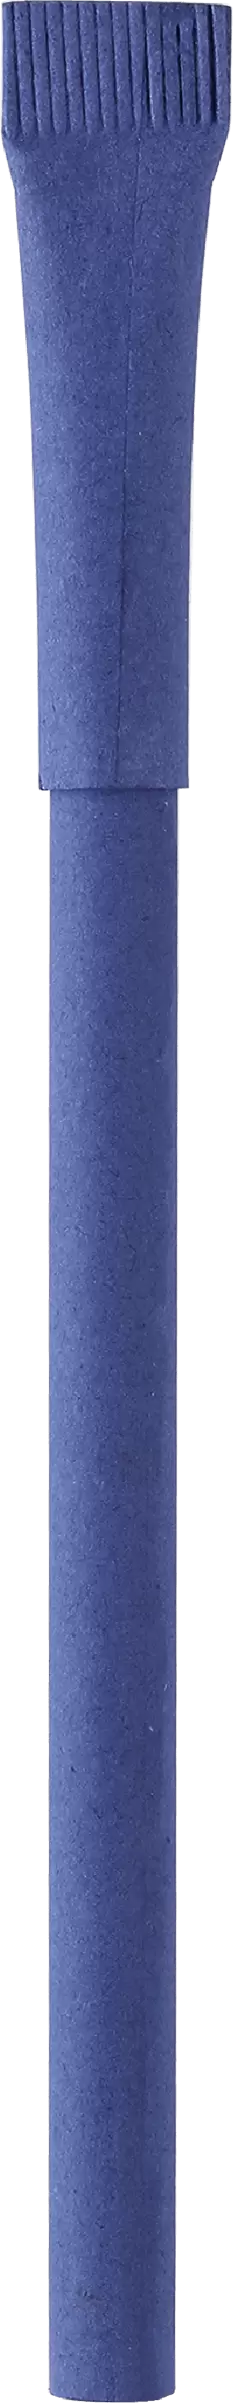 Ручка KRAFT Синяя 3010-01